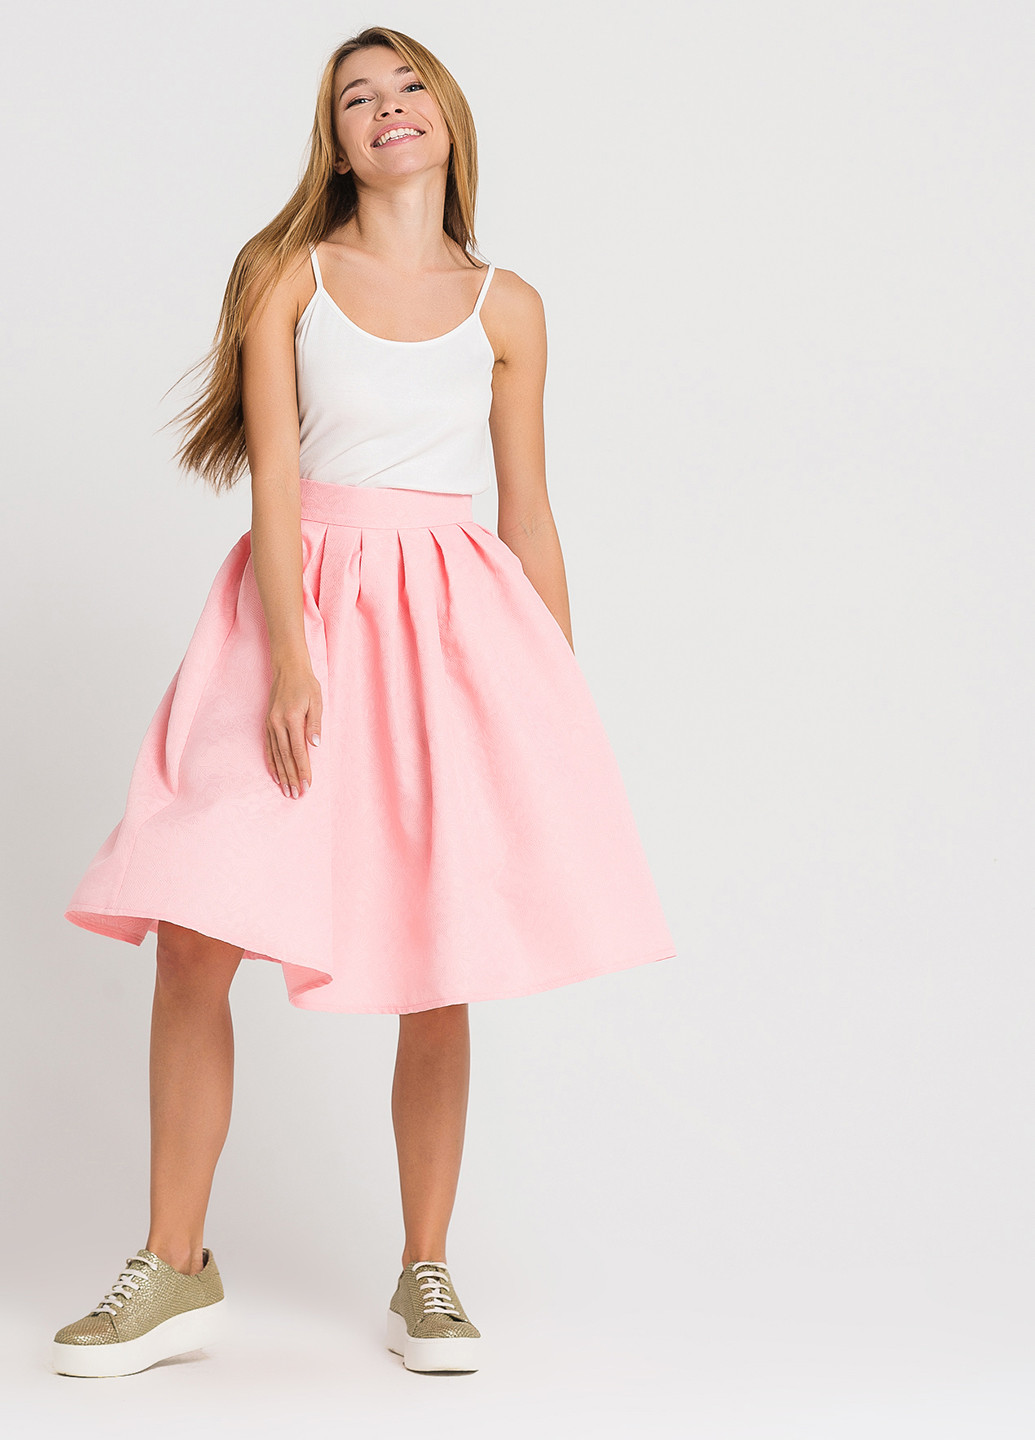 Светло-розовая кэжуал юбка Vovk клешированная